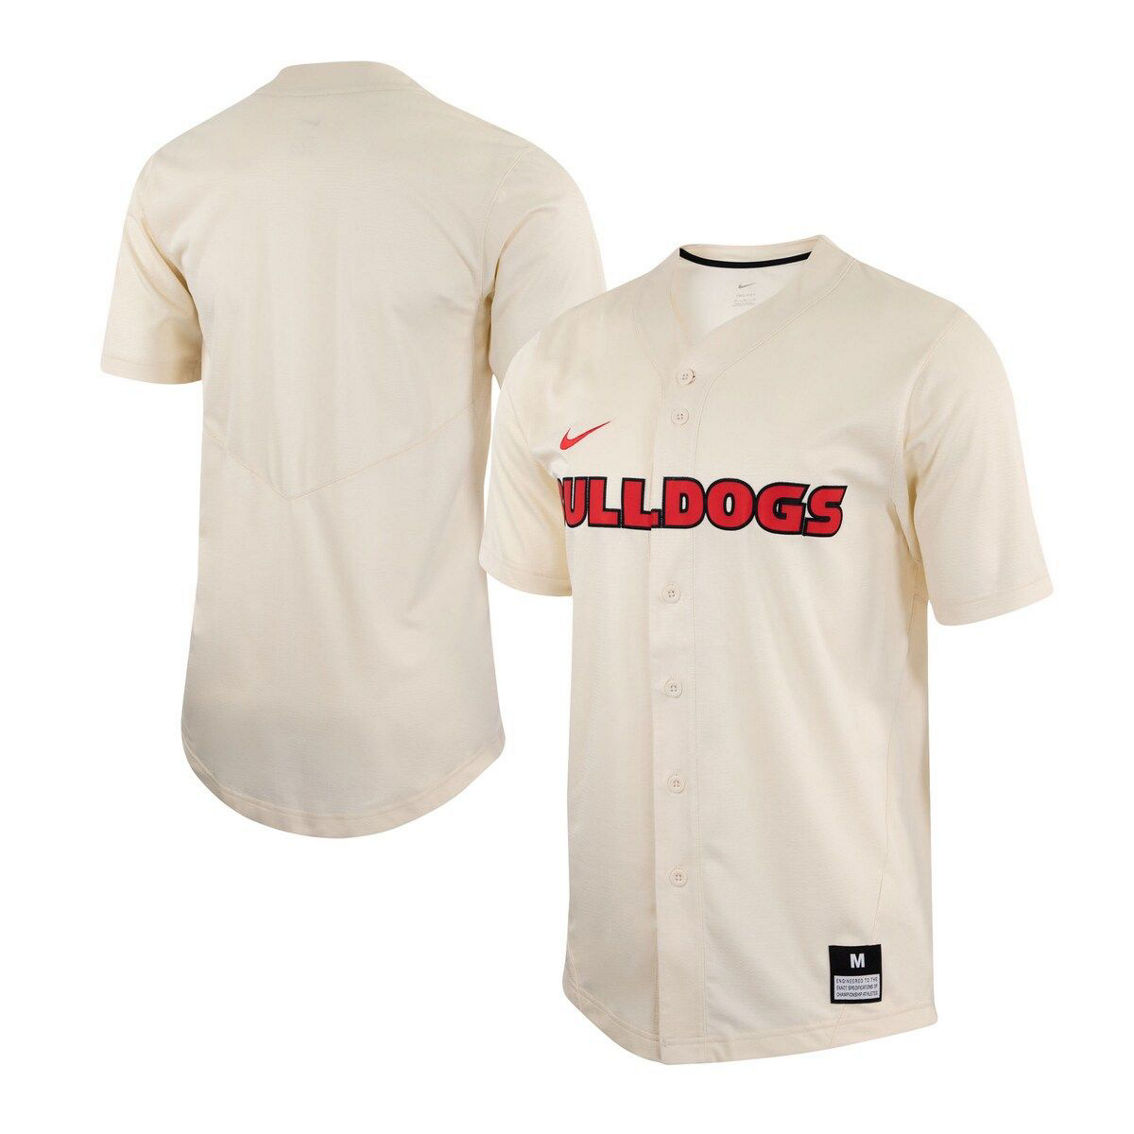 Men's Nike Natural Alabama Crimson Tide Replica Full-Button Baseball Jersey Size: 3XL